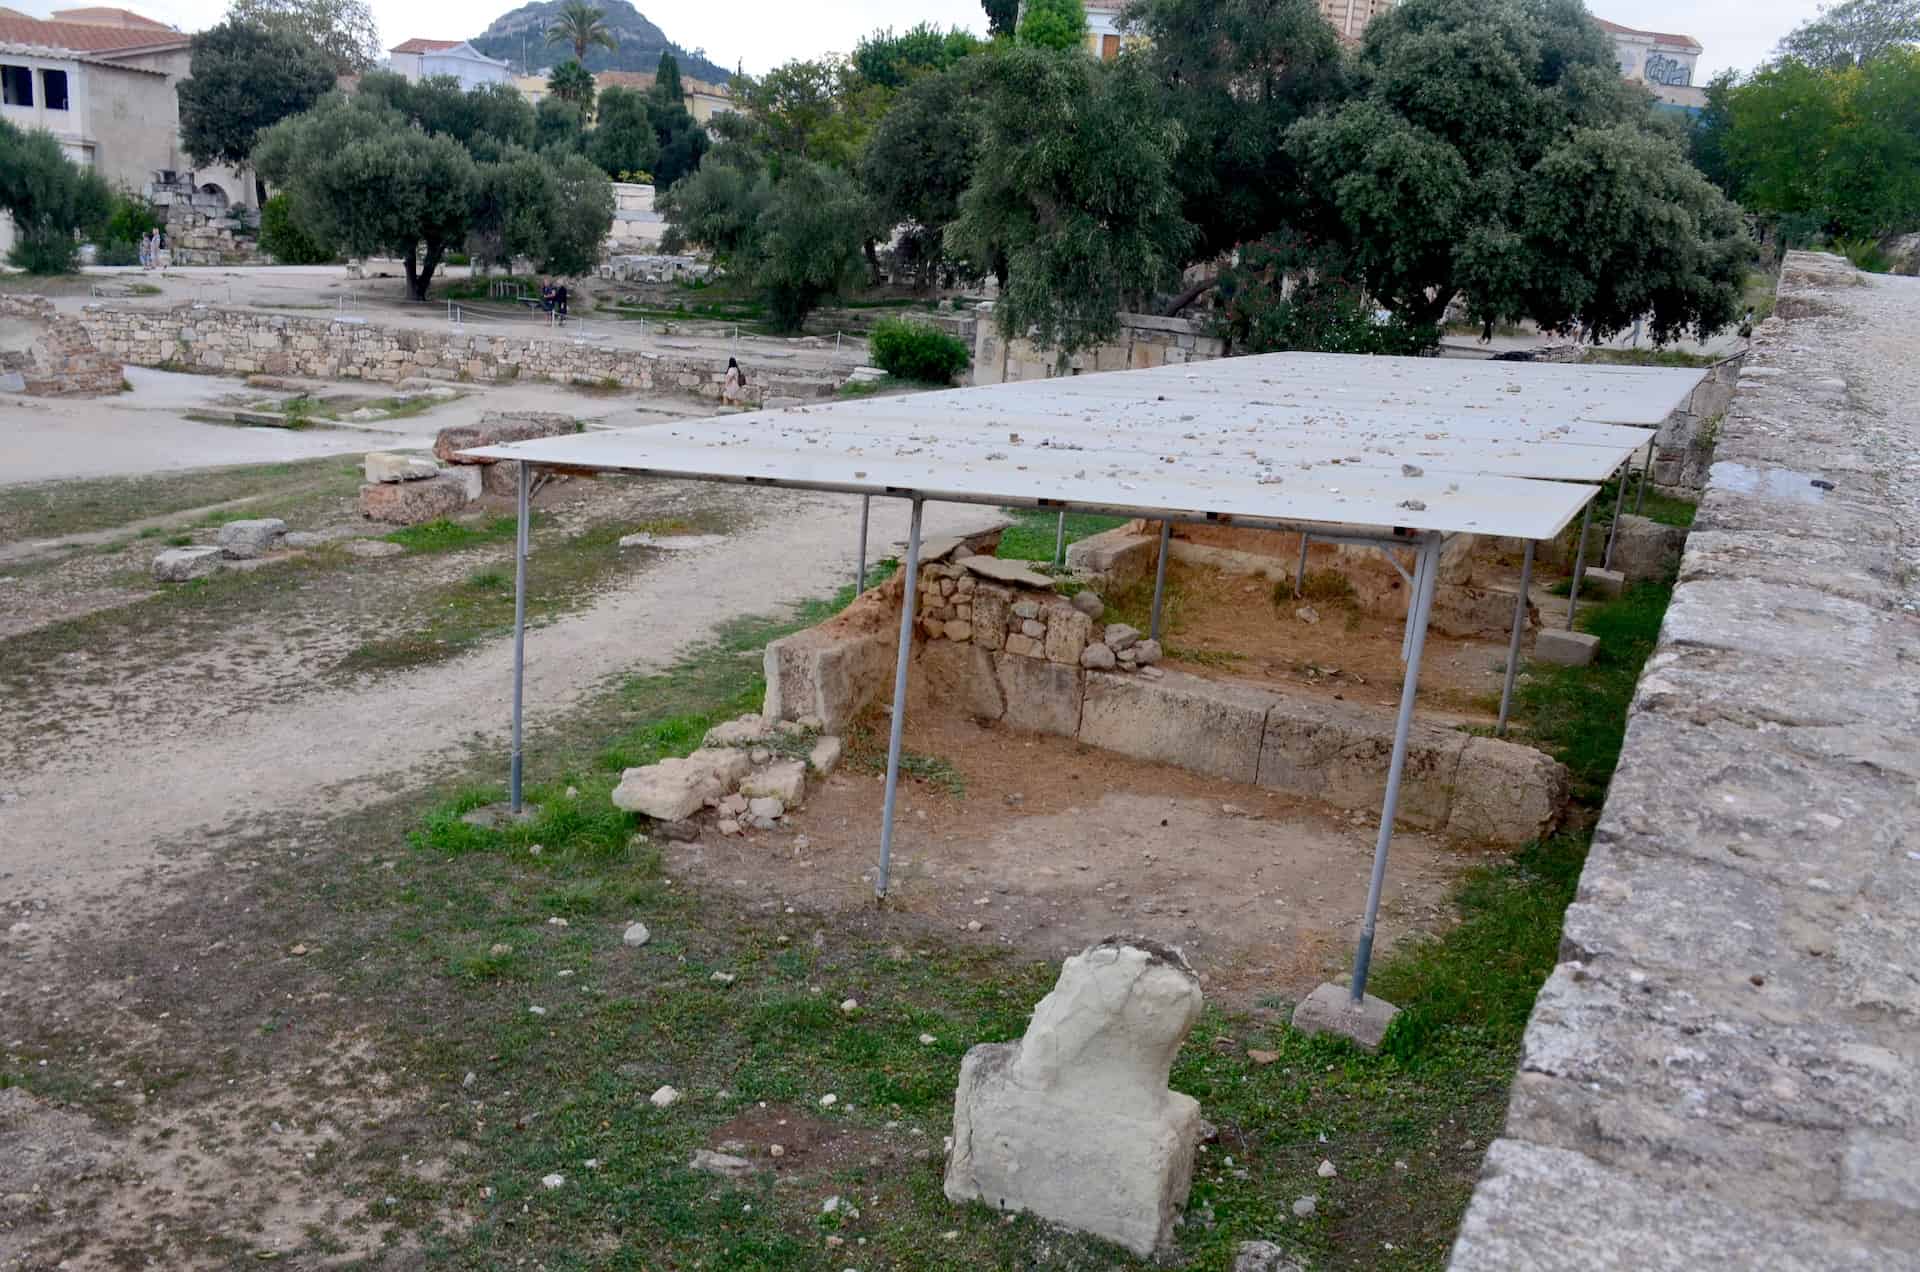 South Stoa I at the Ancient Agora of Athens